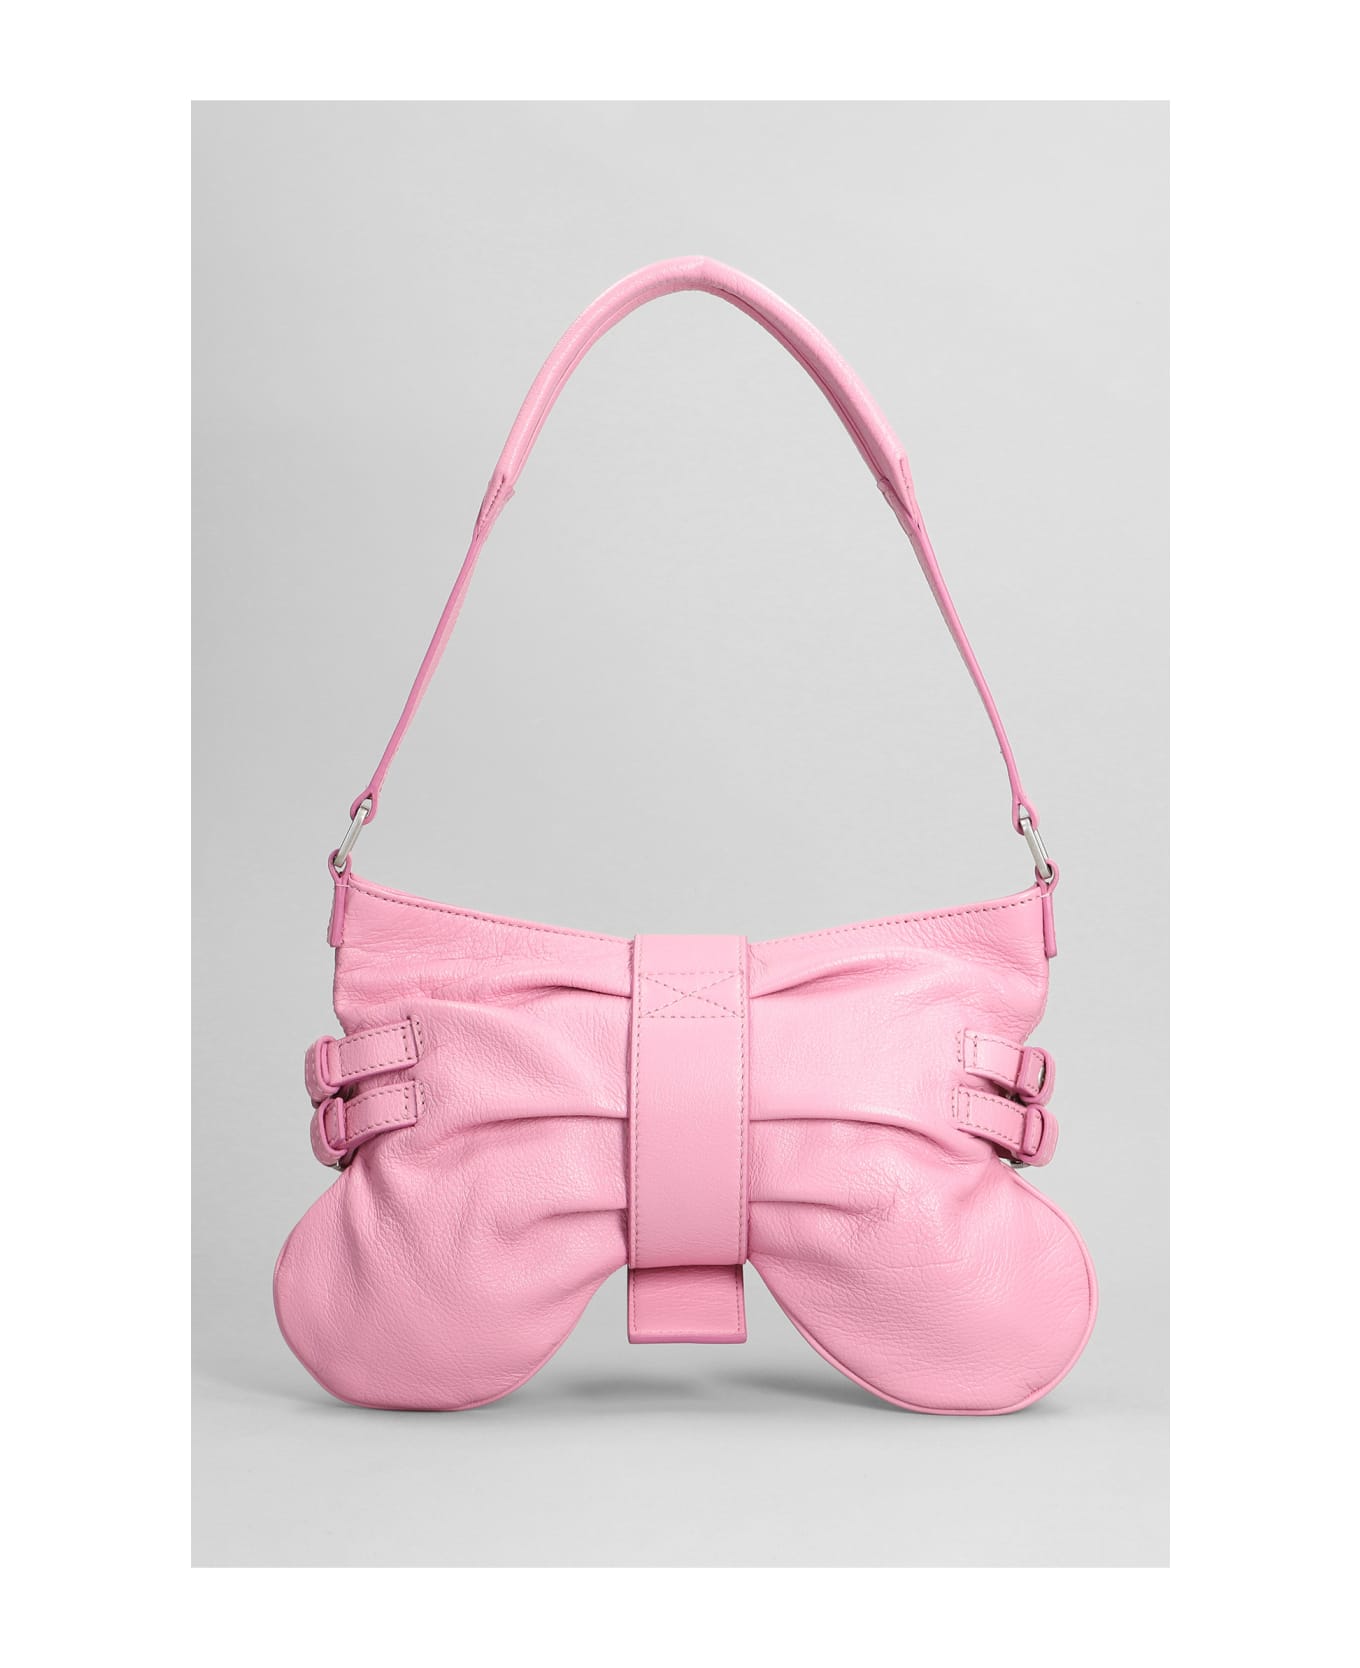 Blumarine Hand Bag In Rose-pink Leather - Dalia トートバッグ